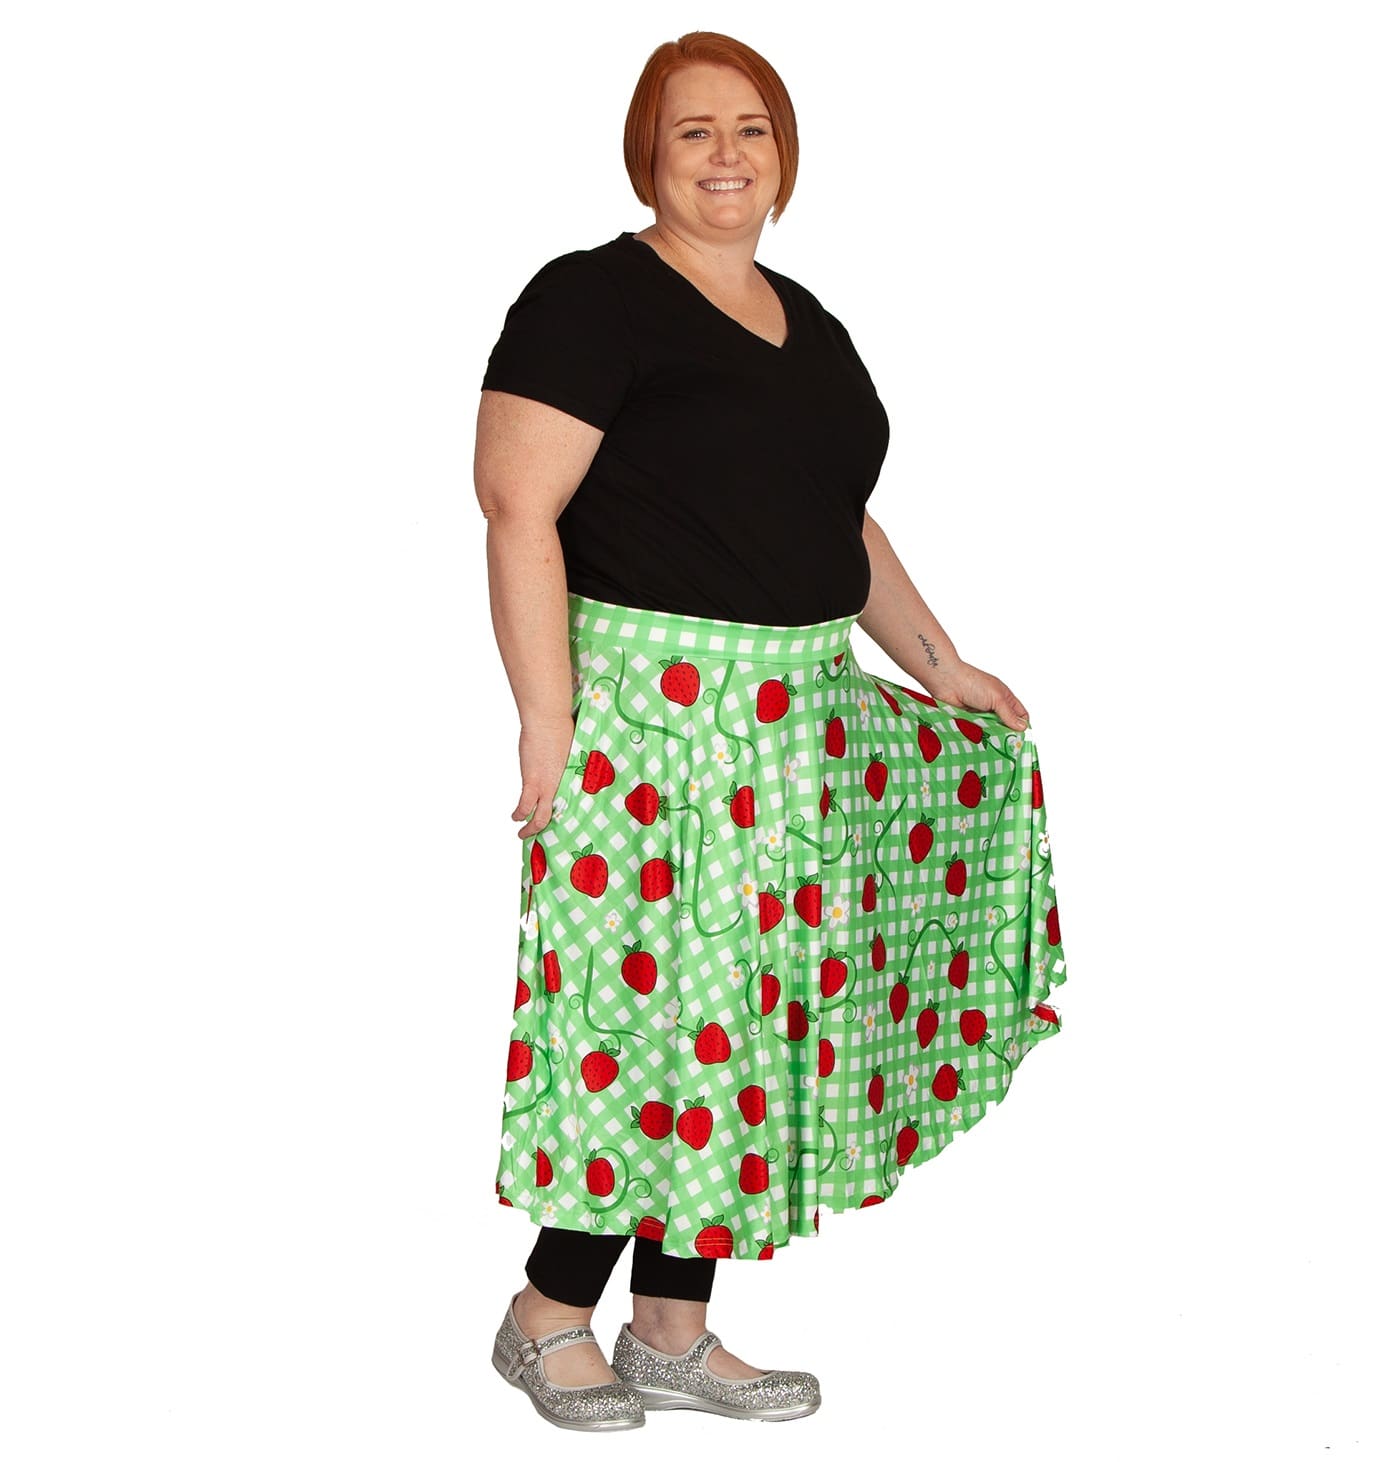 Berry Picnic Swishy Skirt by RainbowsAndFairies.com.au (Strawberry Shortcake - Green - Skirt With Pockets - Circle Skirt - Vintage Inspired - Mod) - SKU: CL_SWISH_BERRY_ORG - Pic-08